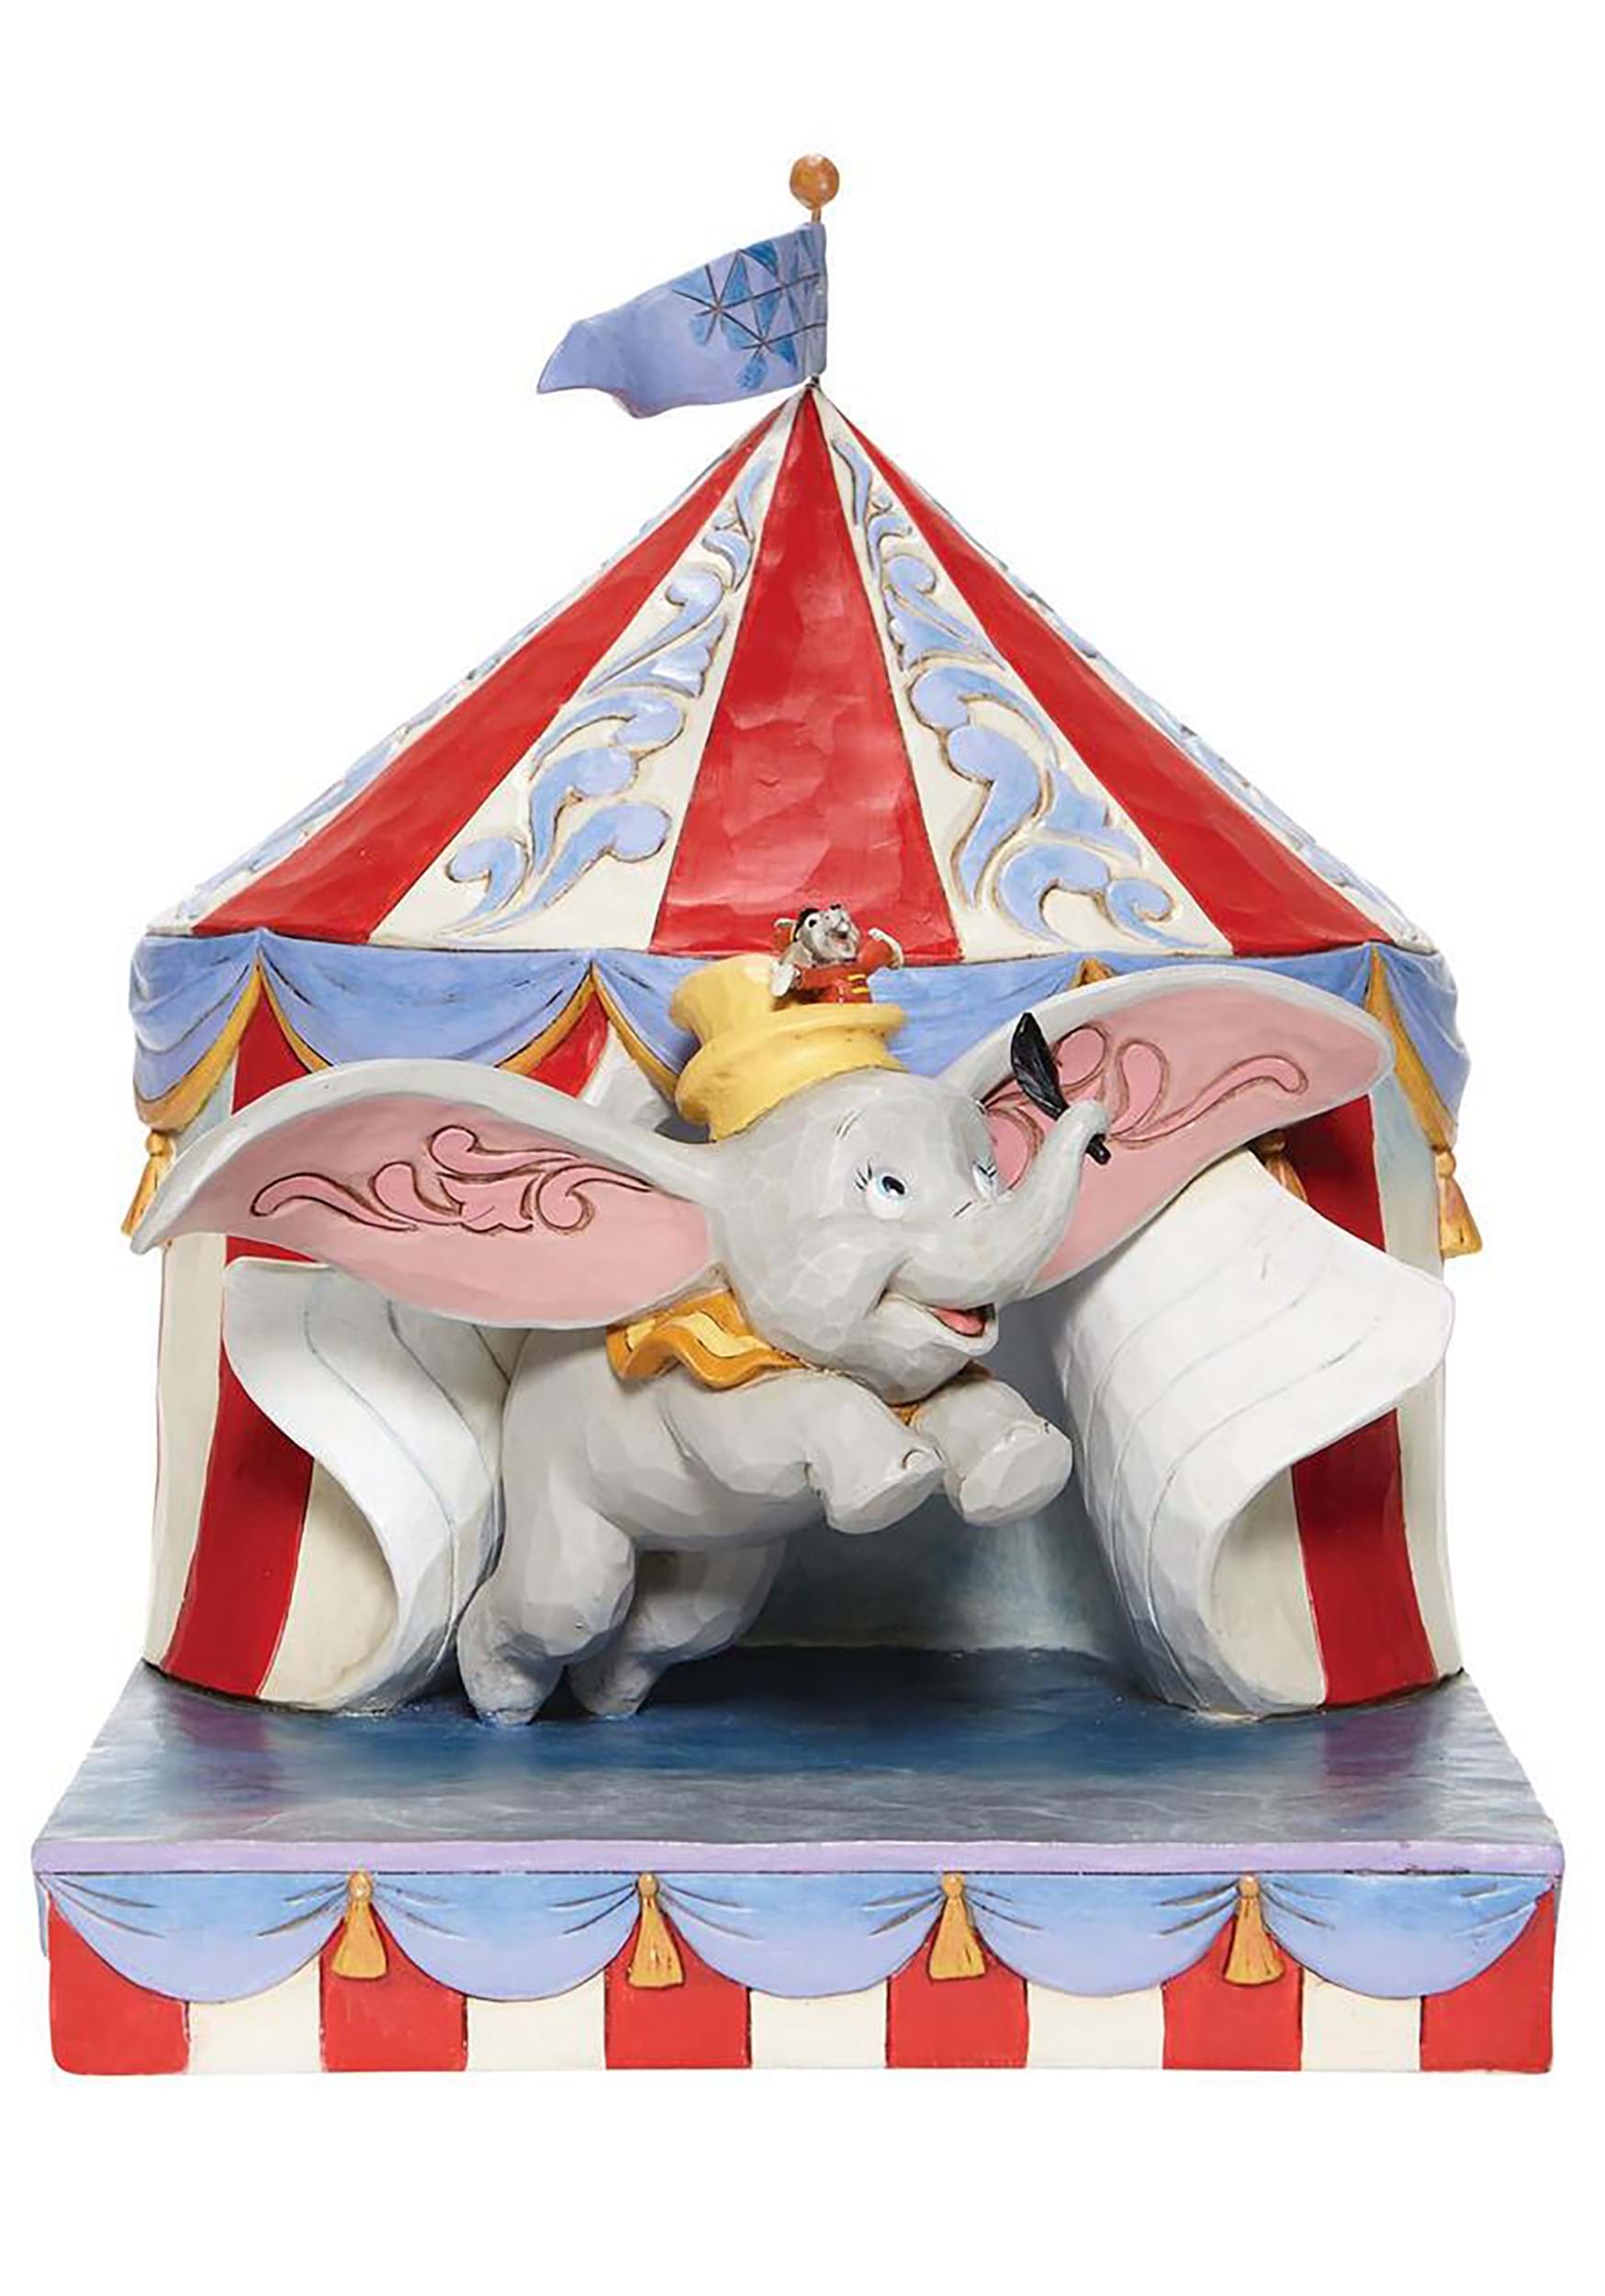 Jim Shore Dumbo Flying Out of Tent Scene Disney Diorama